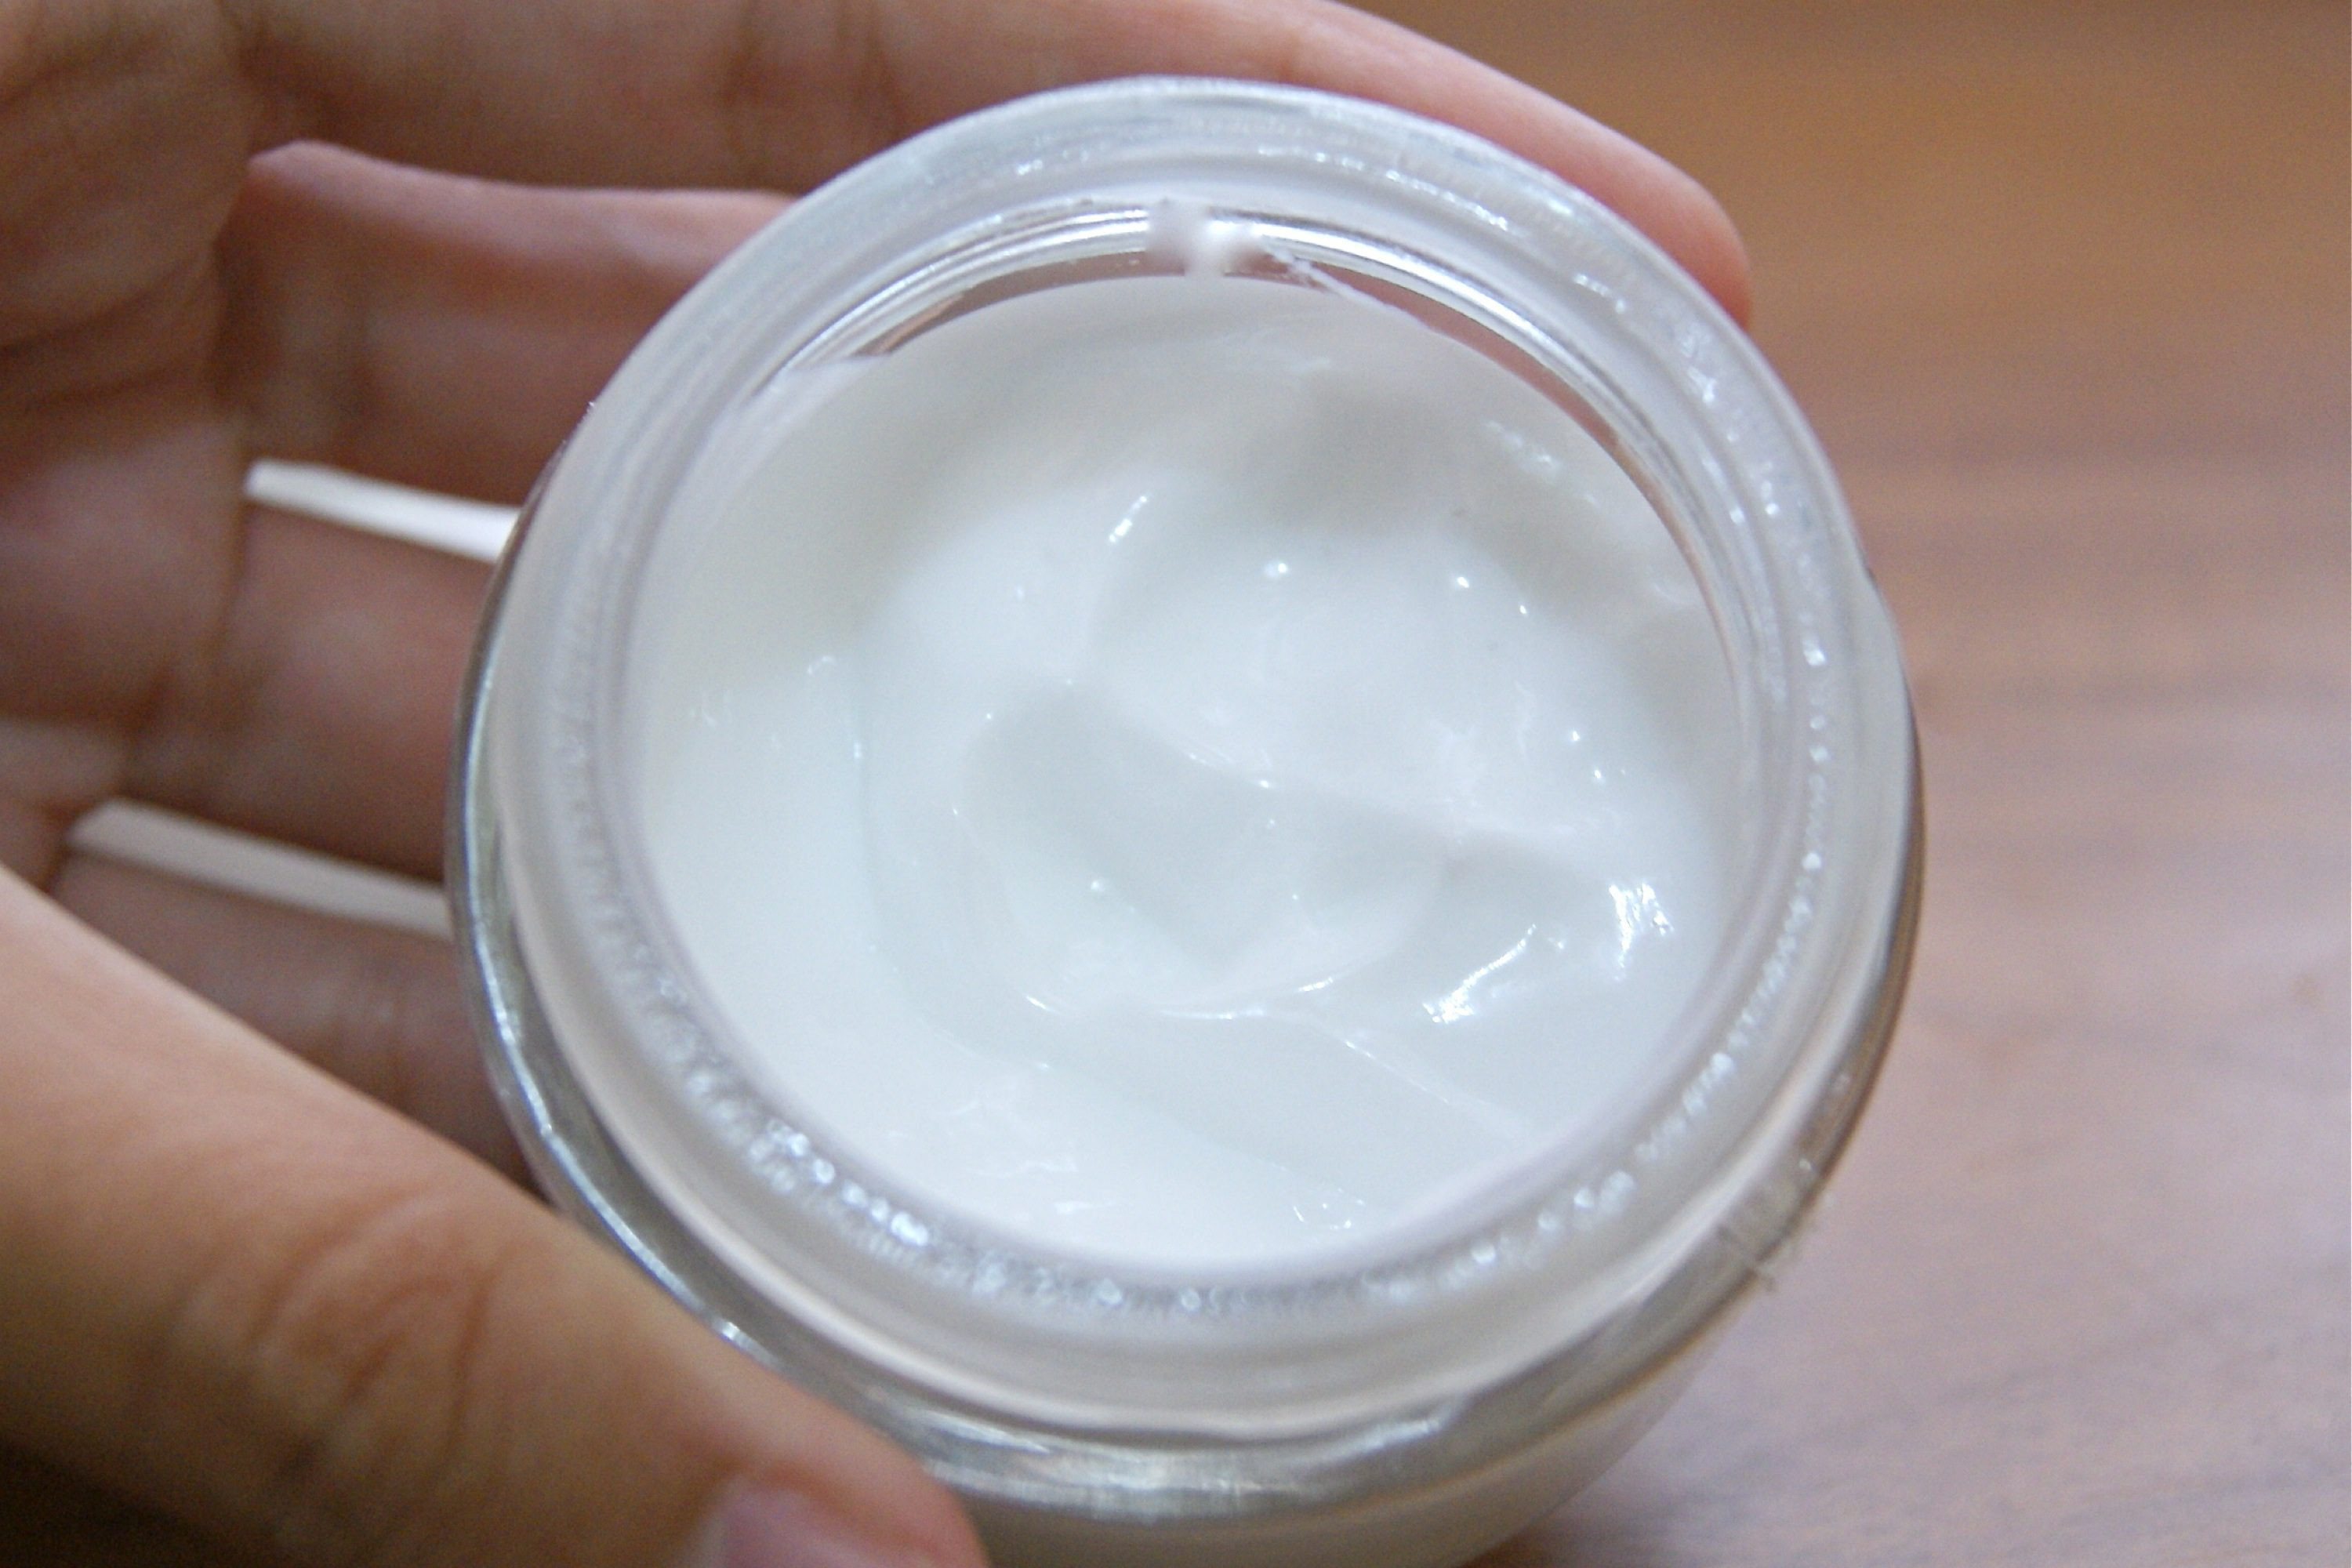 Best ideas about DIY Facial Cream
. Save or Pin Homemade Facial Bleaching Cream Now.